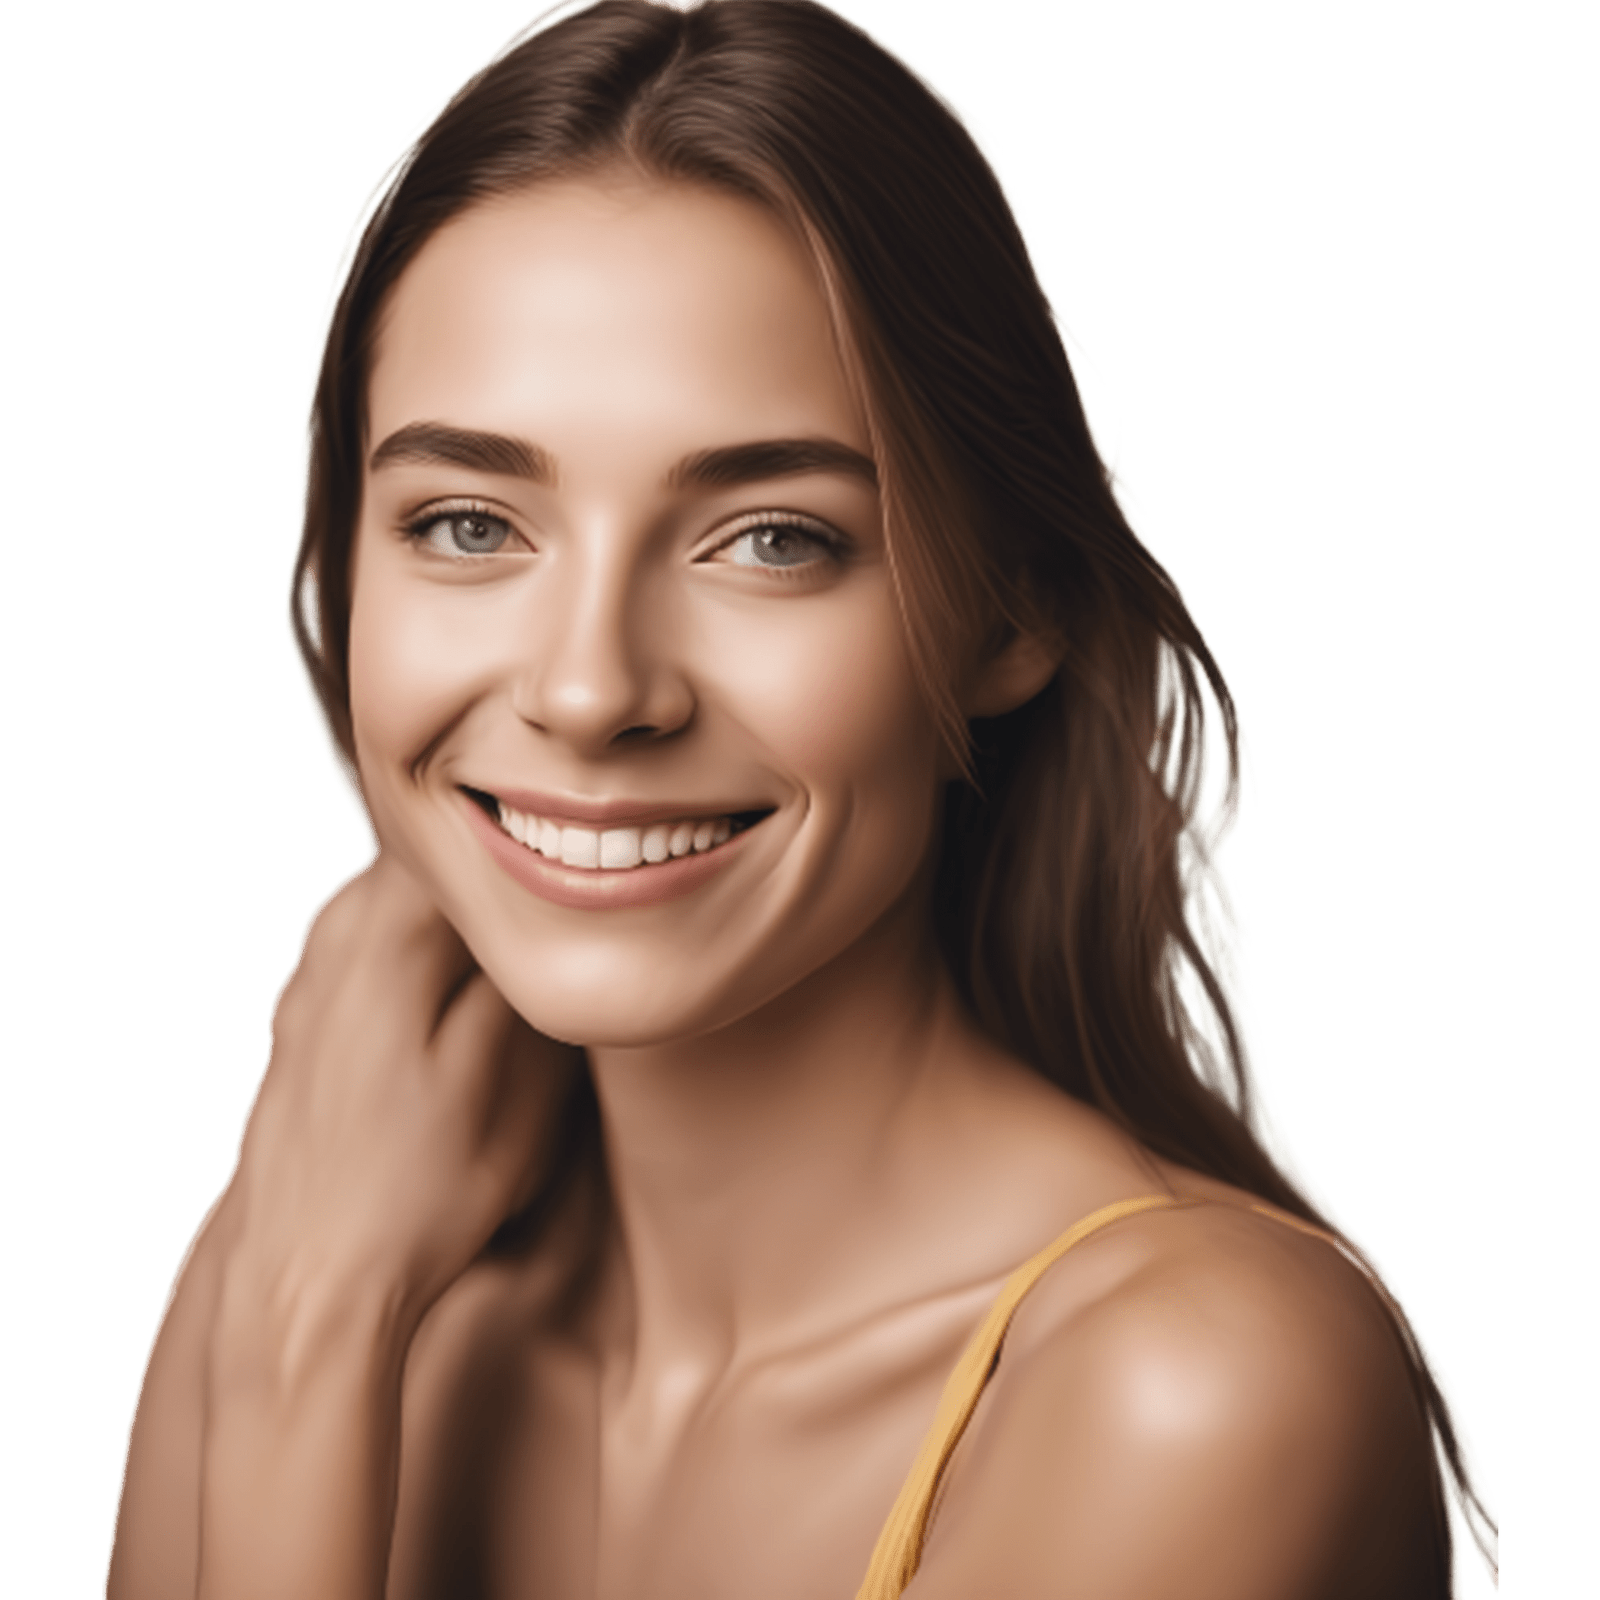 beautiful acne free flawless skin of smiling woman